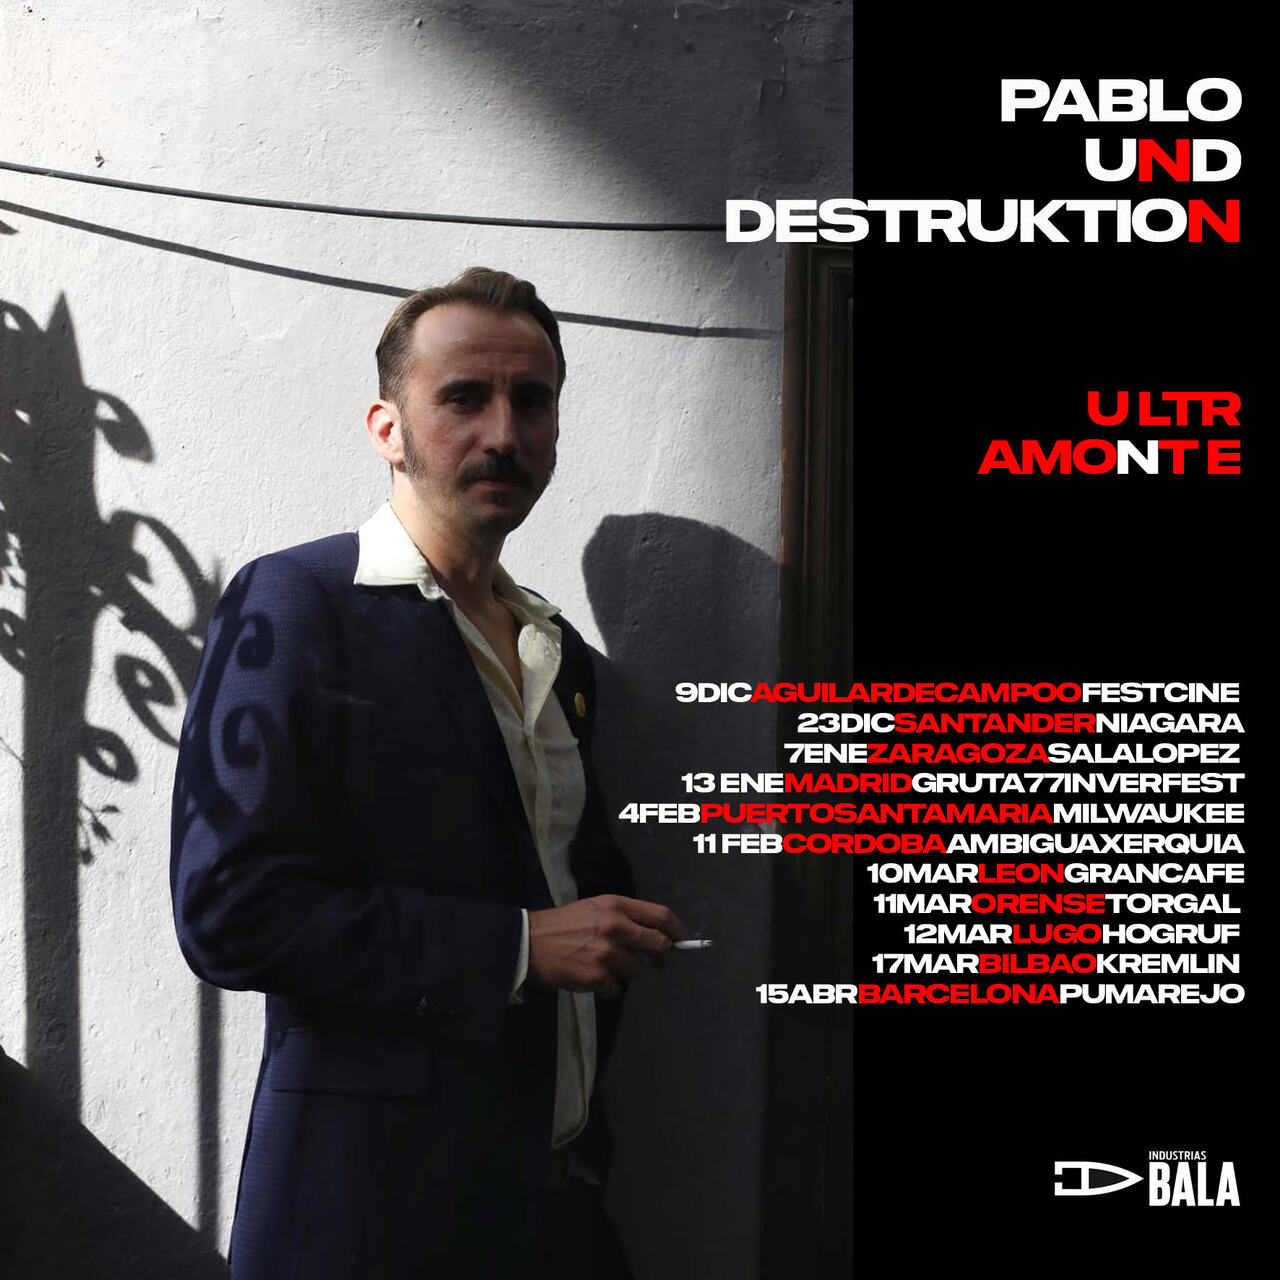 Pablo Und Destruktion presenta en directo "Ultramonte"